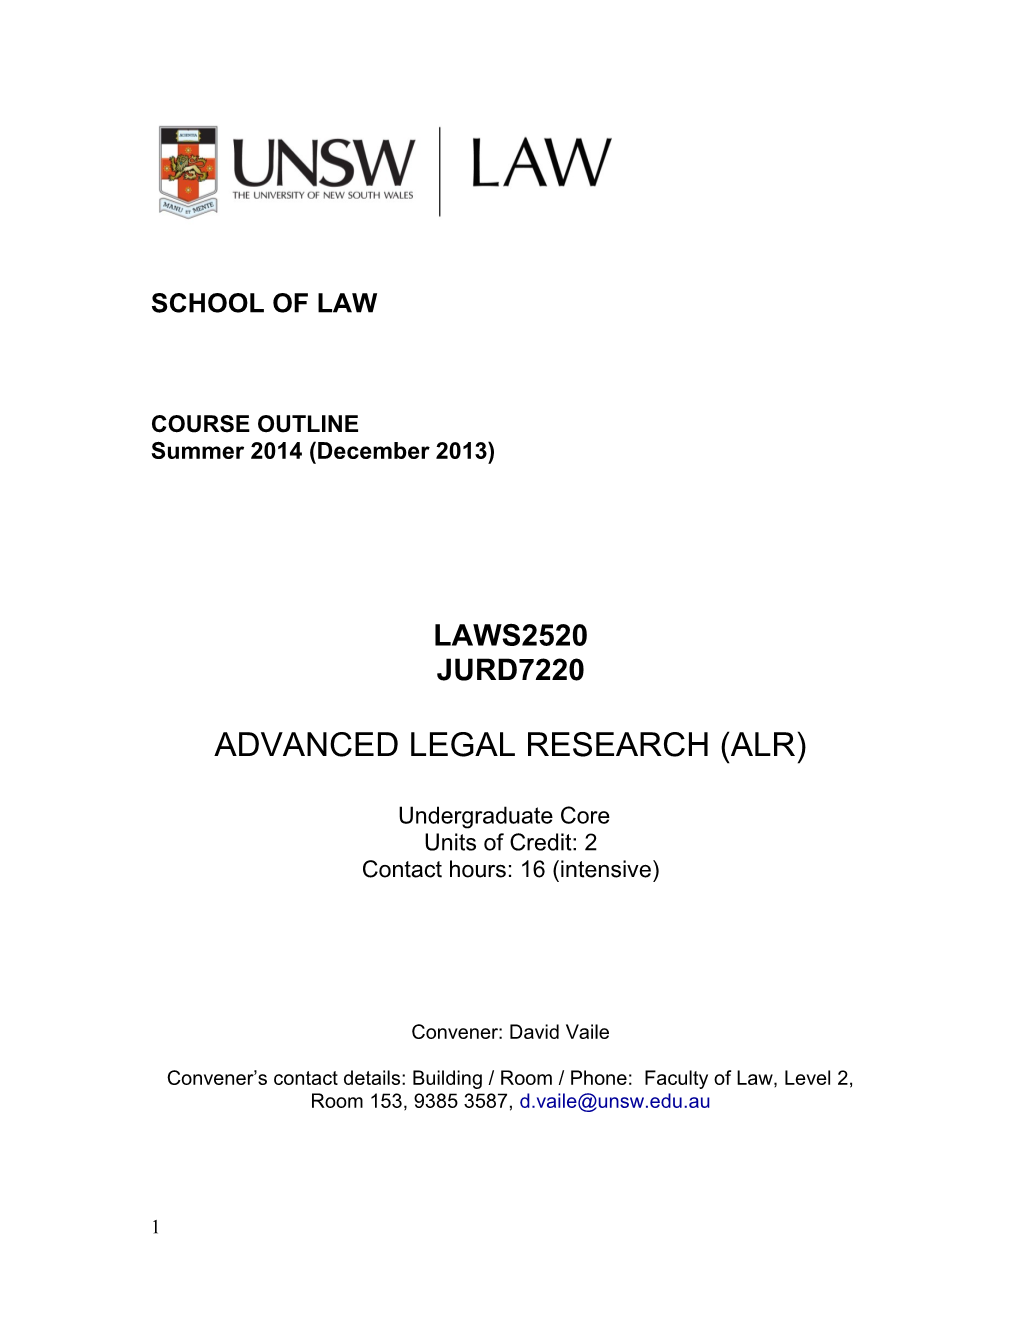 Advanced Legal Research (Alr)